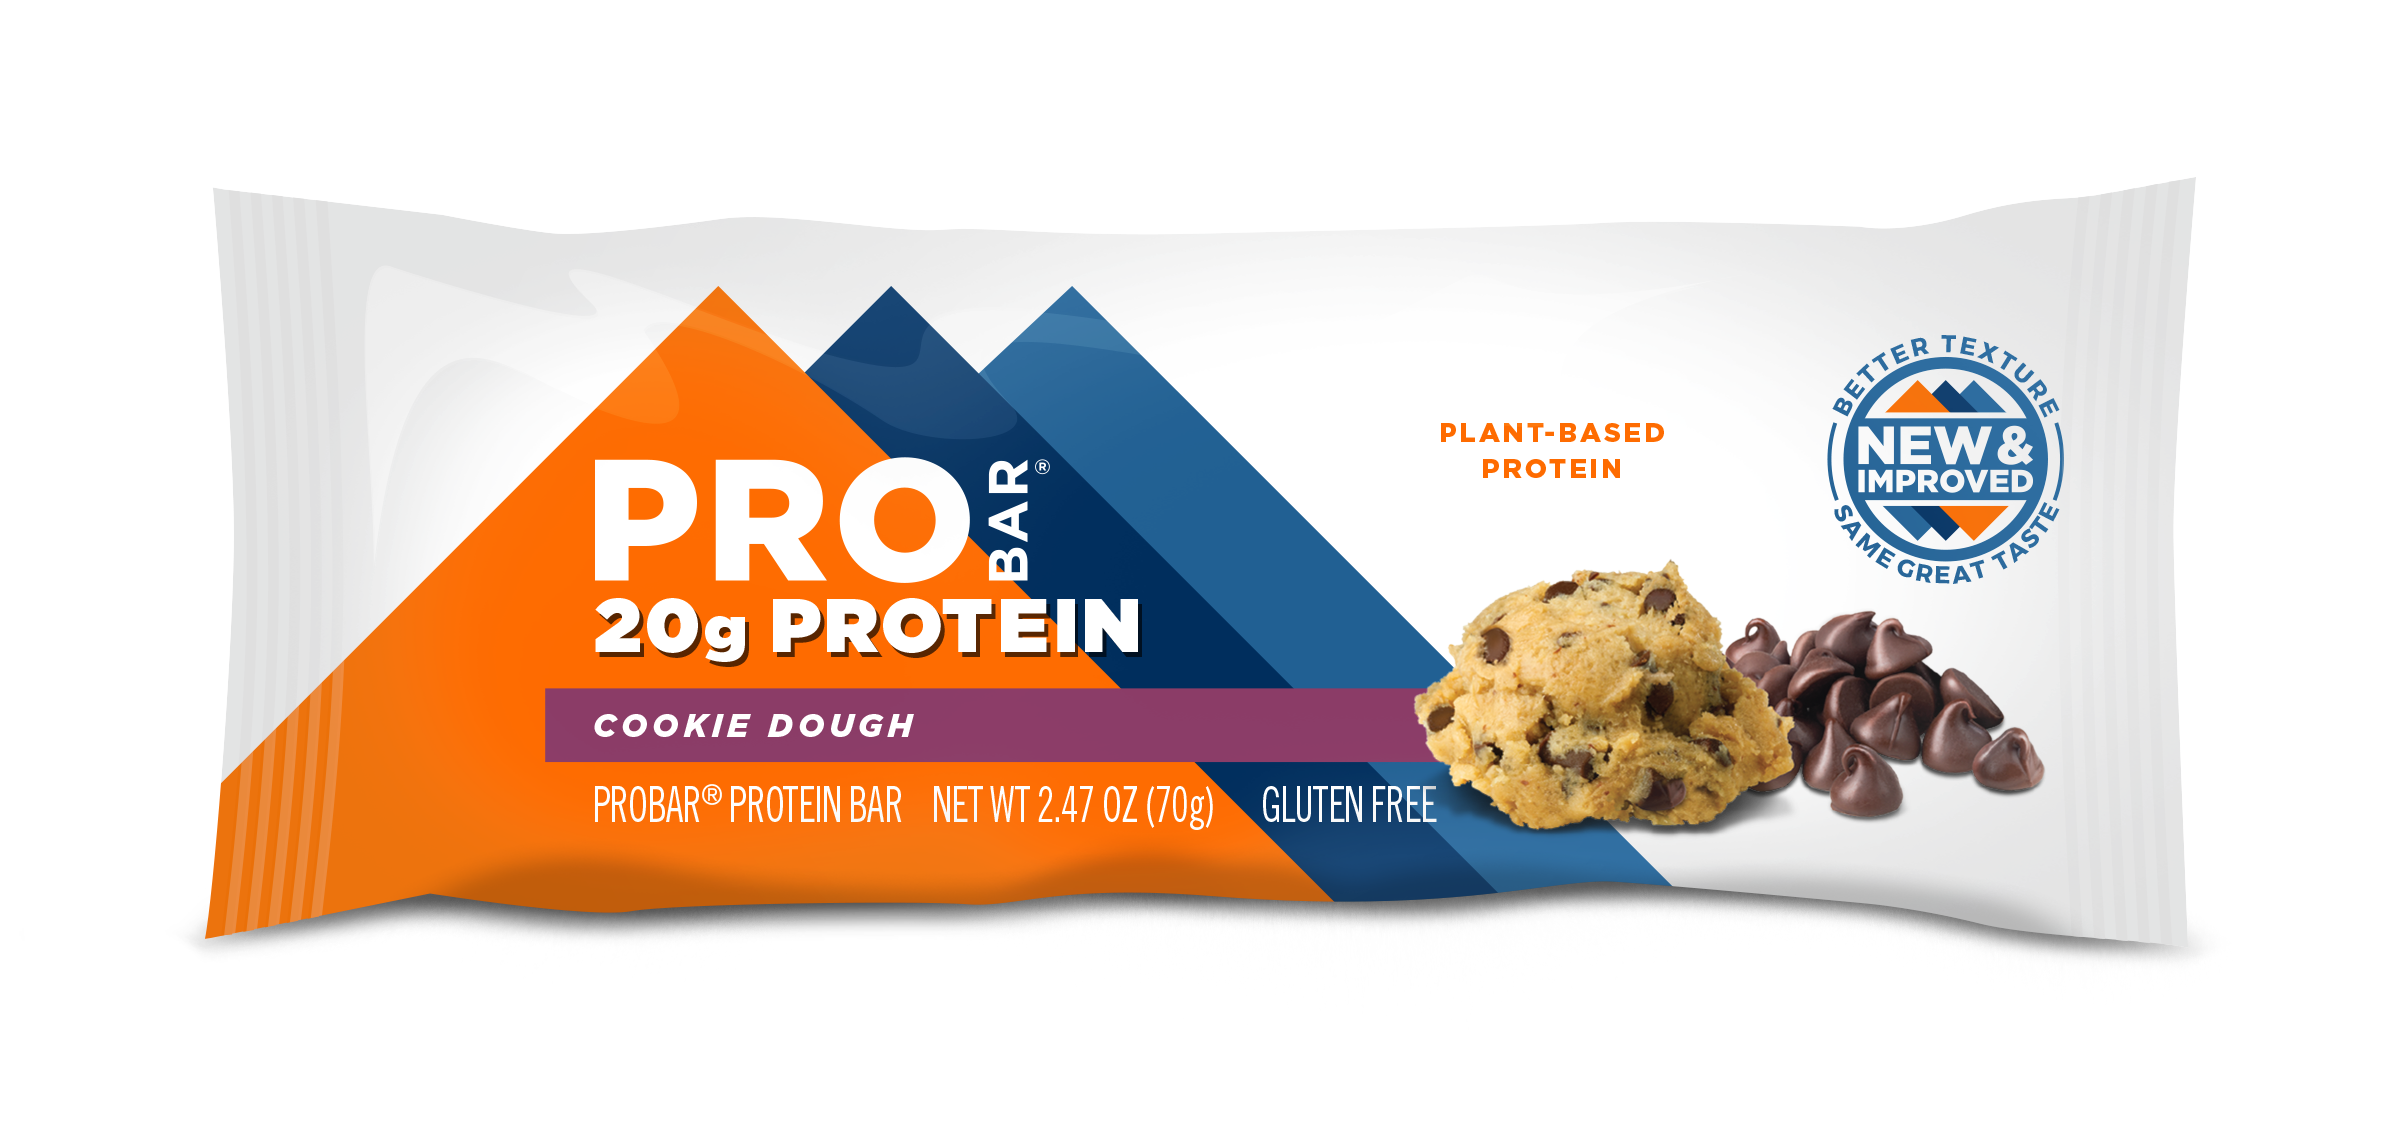 ProBar Cookie Dough Protein Bar 12 innerpacks per case 2.5 oz